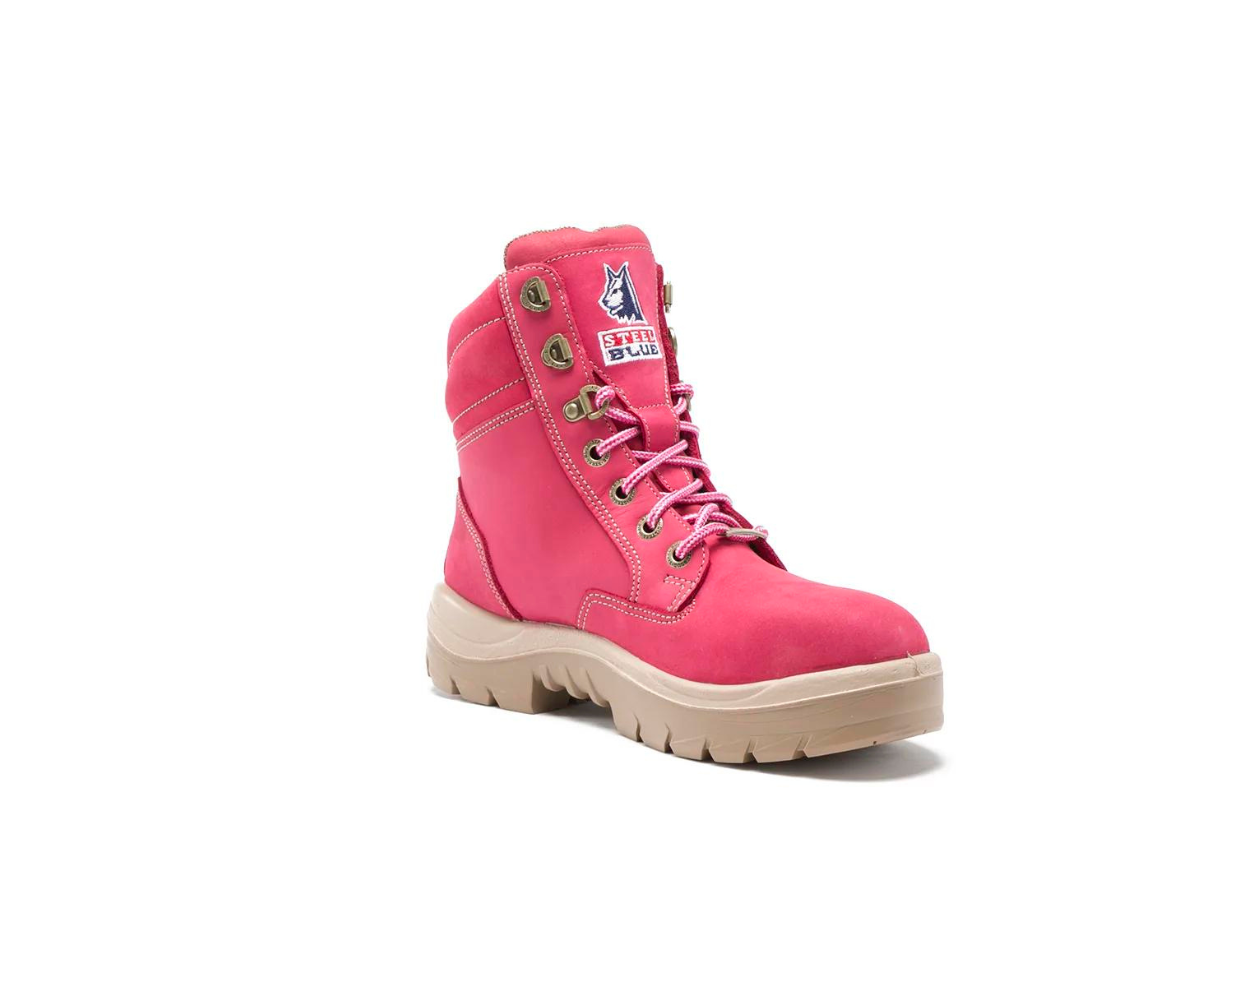 STEEL BLUE Women's Southern Cross 6 in. Lace Up Work Boots - Steel Toe -  Pink Size 6(W) 522860W-060-PNK - The Home Depot